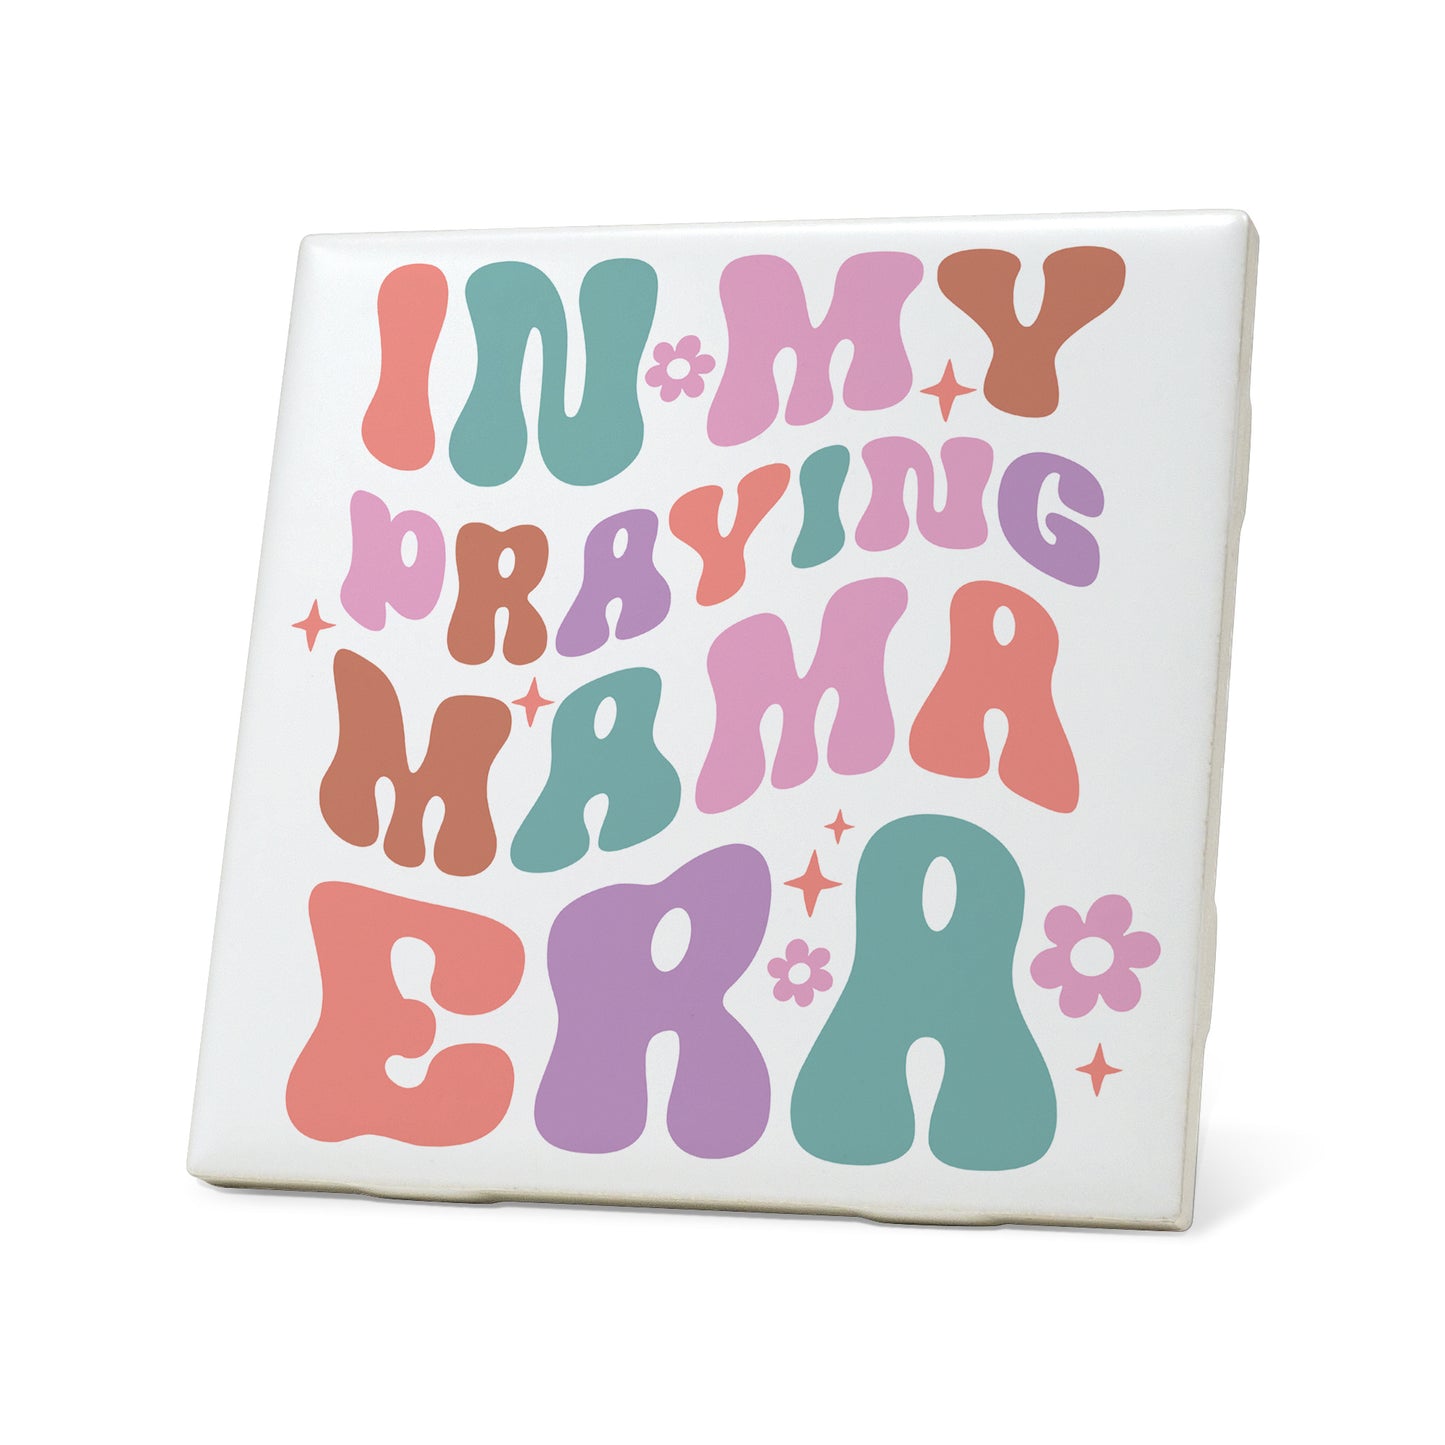 In my praying mama era Graphic Coasters